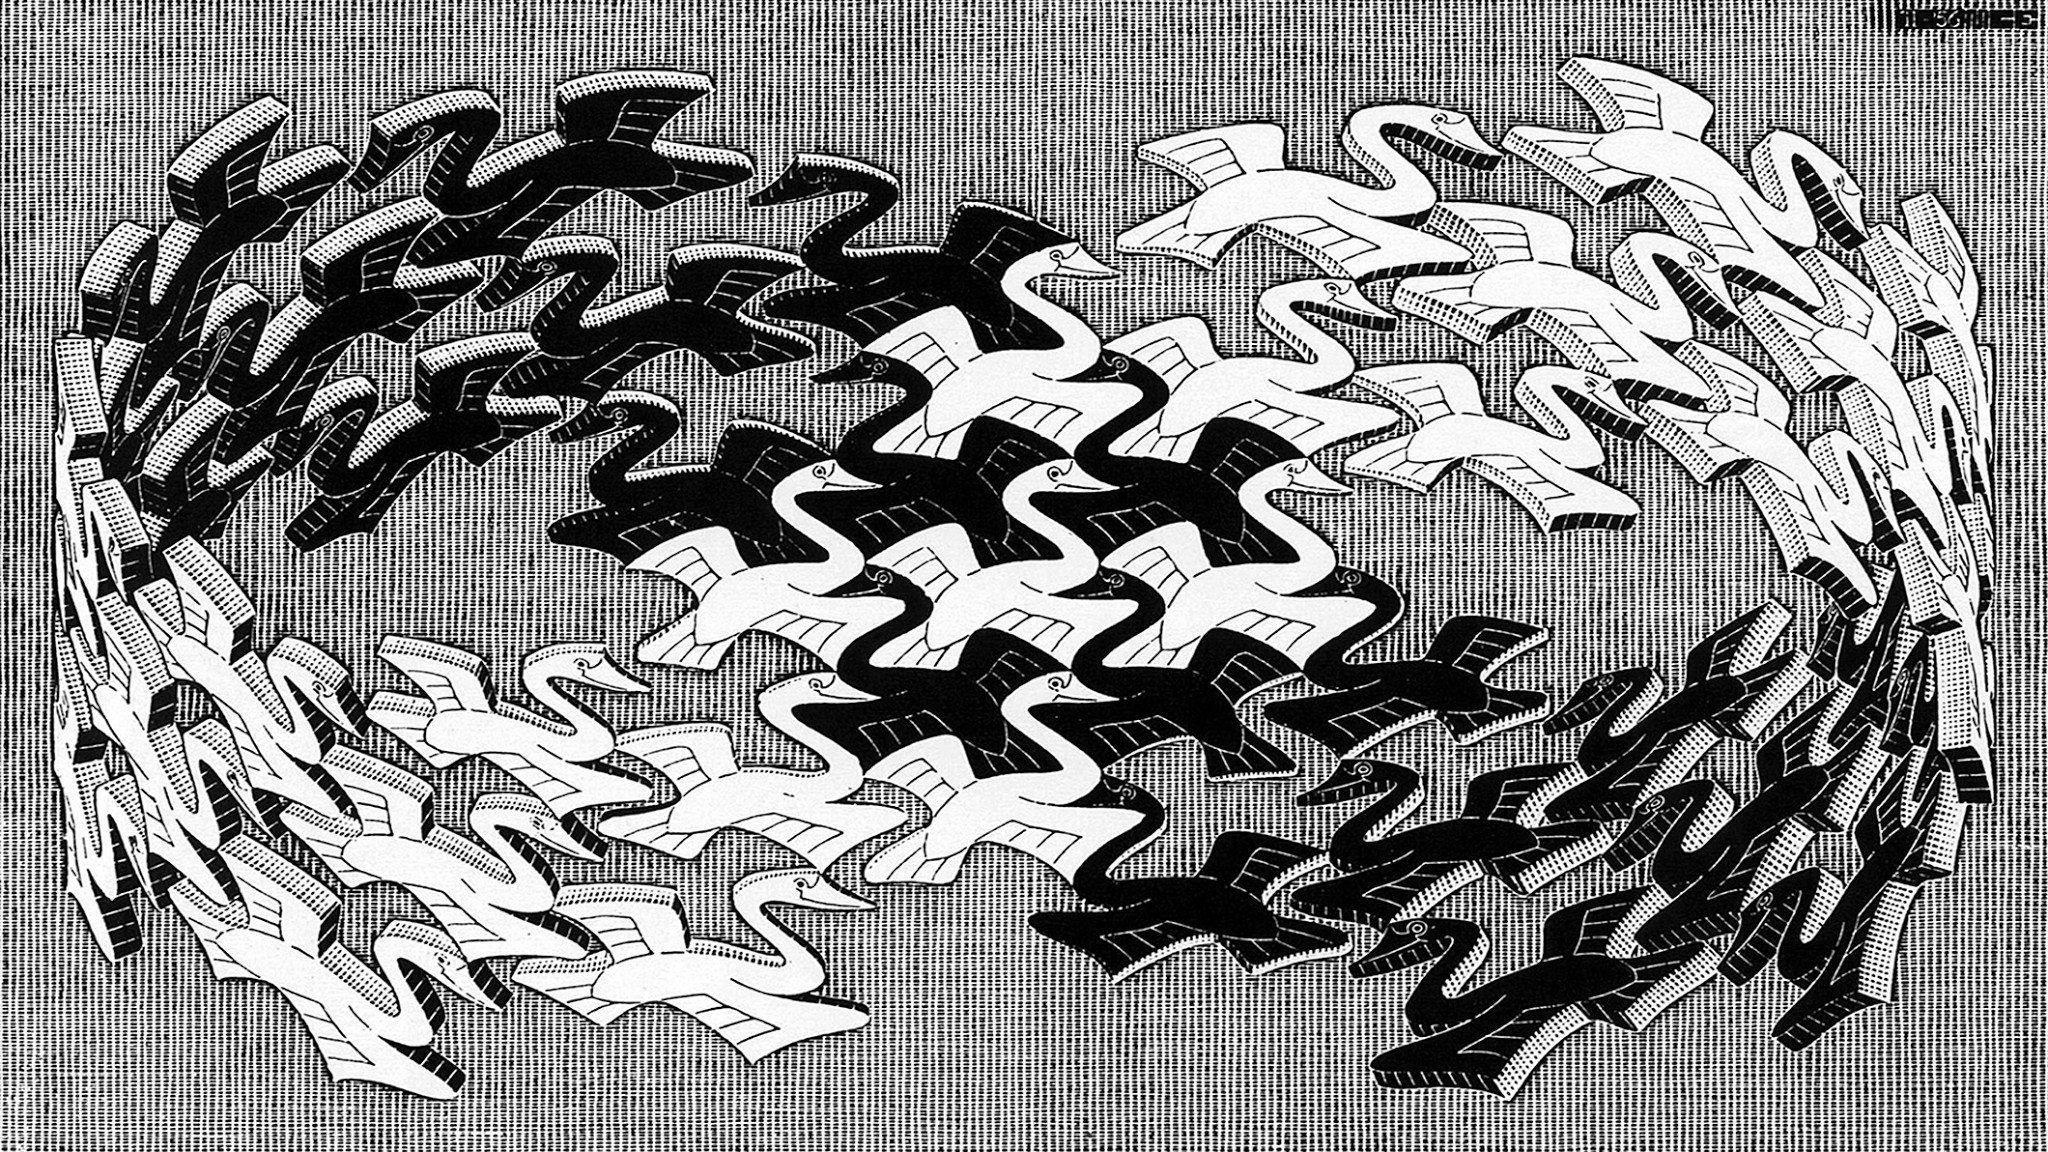 General 2048x1152 artwork M. C. Escher monochrome psychedelic animals birds flying CGI Mobius strip optical illusion